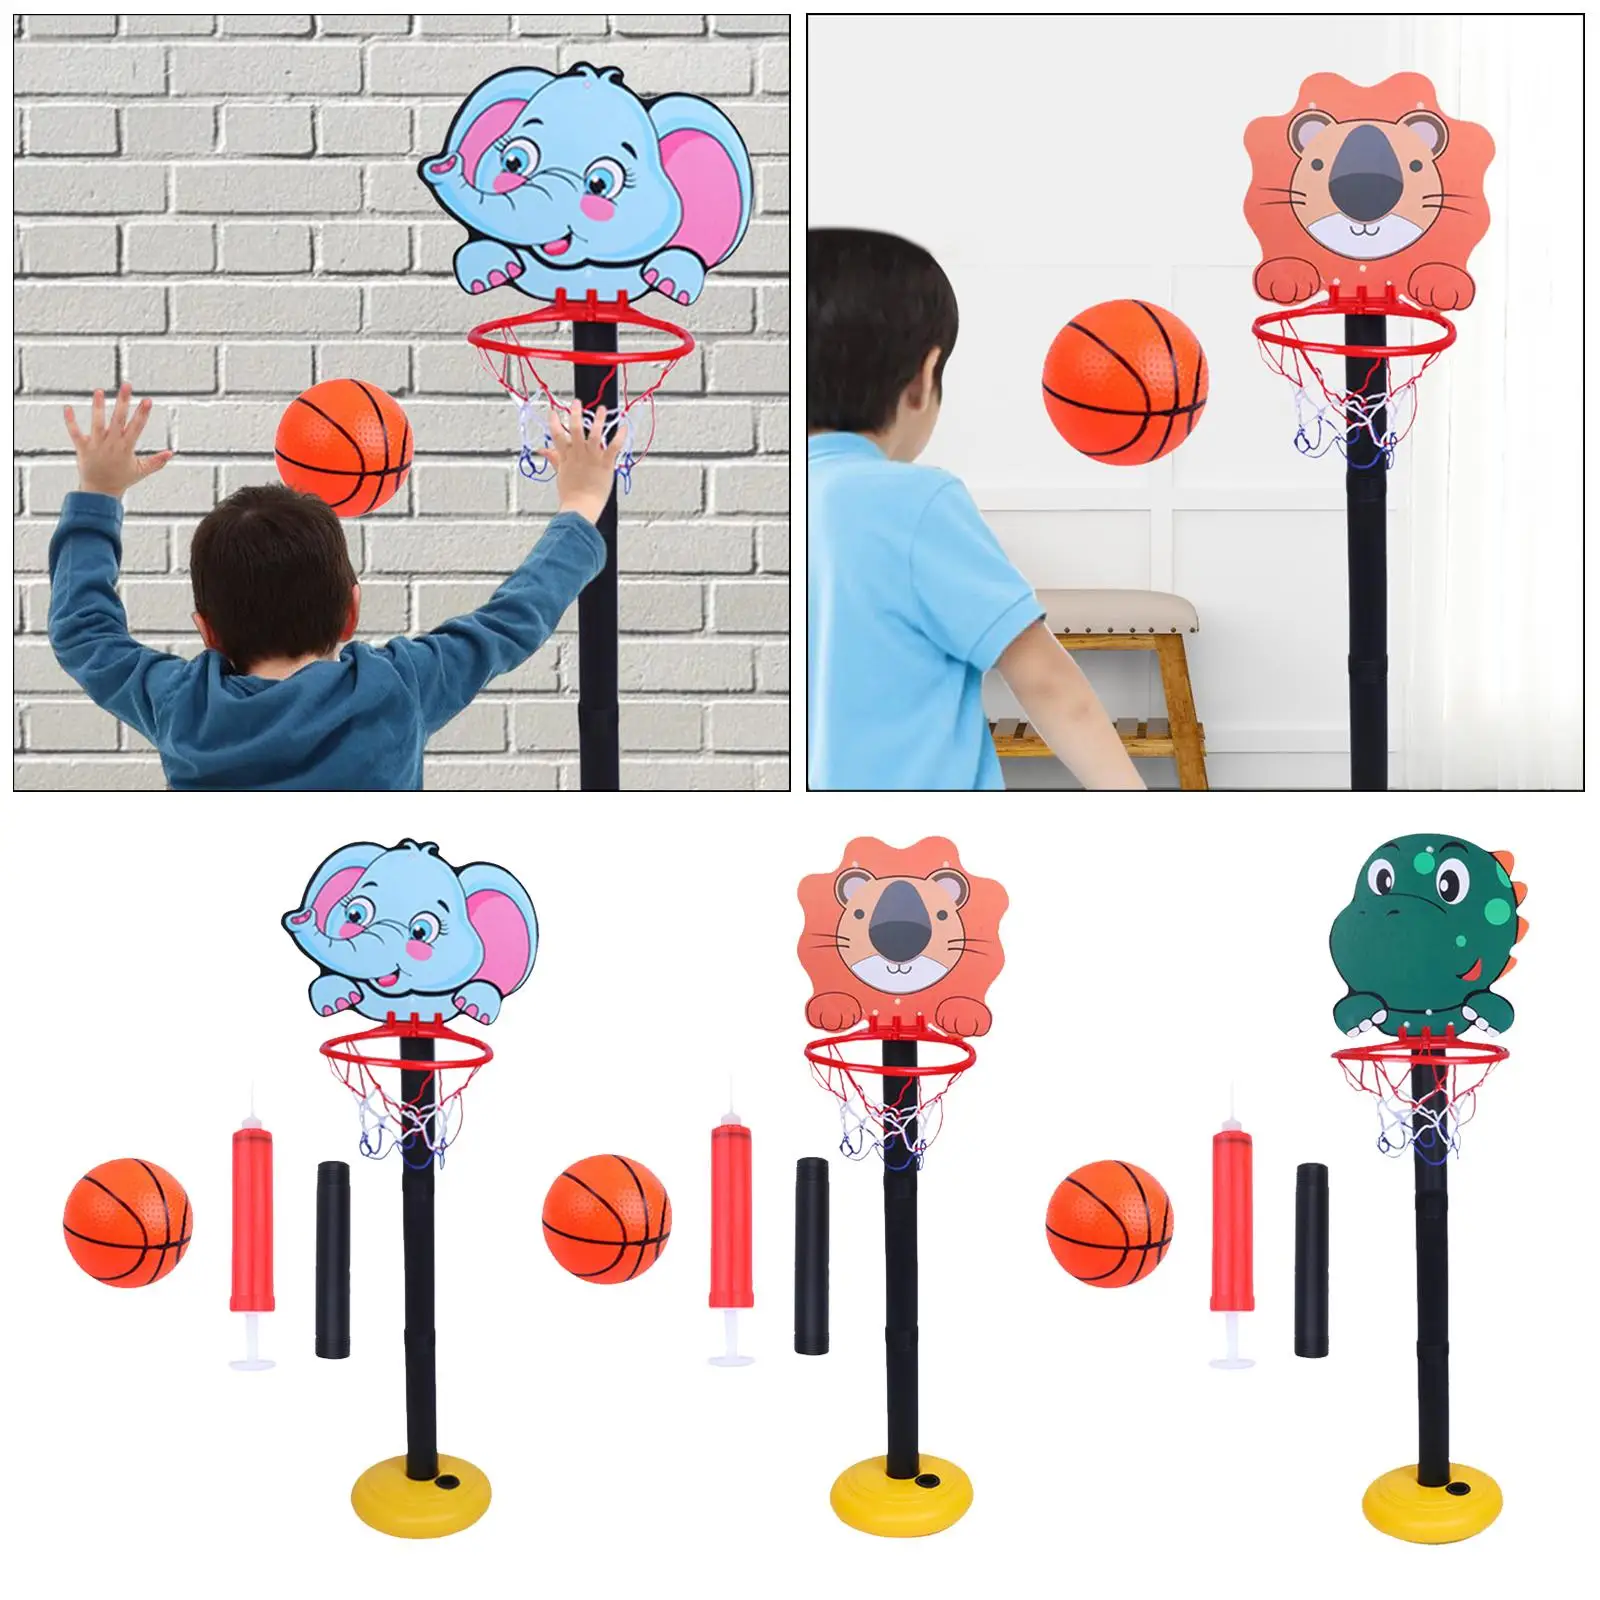 Basketball Hoop Set Playing sport Toys for Office Door Bathroom Courtyard Outdoor